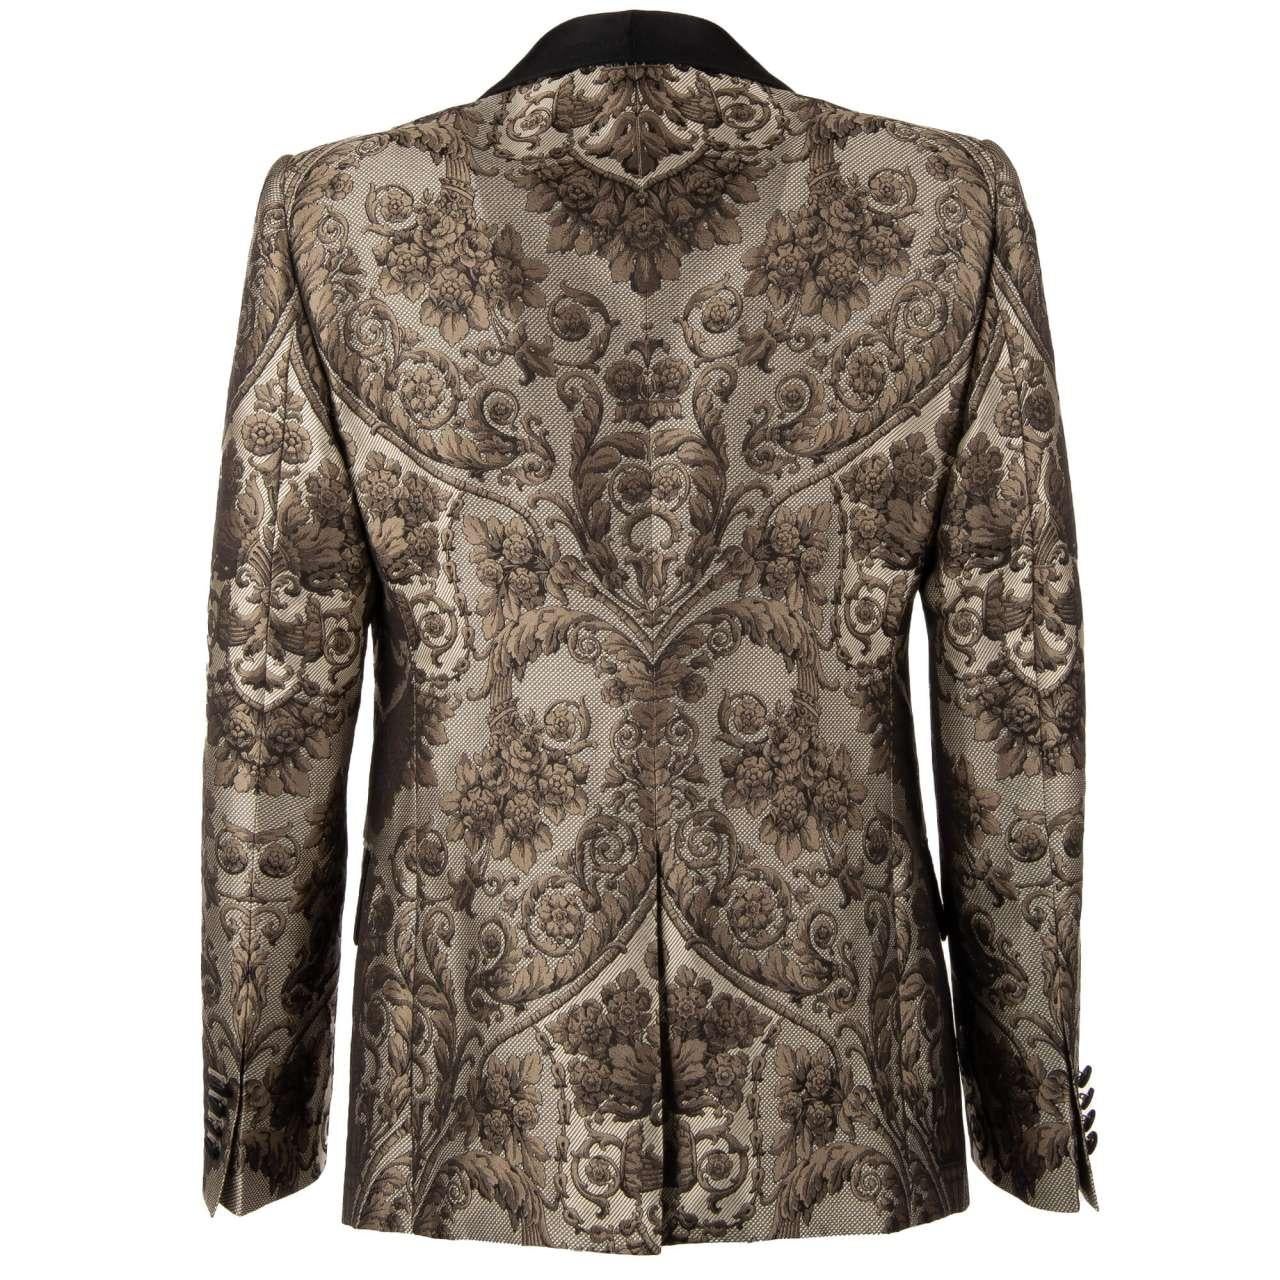 Dolce & Gabbana Baroque Jacquard Blazer with Waistcoat Black Beige 50 US 40 M L For Sale 3